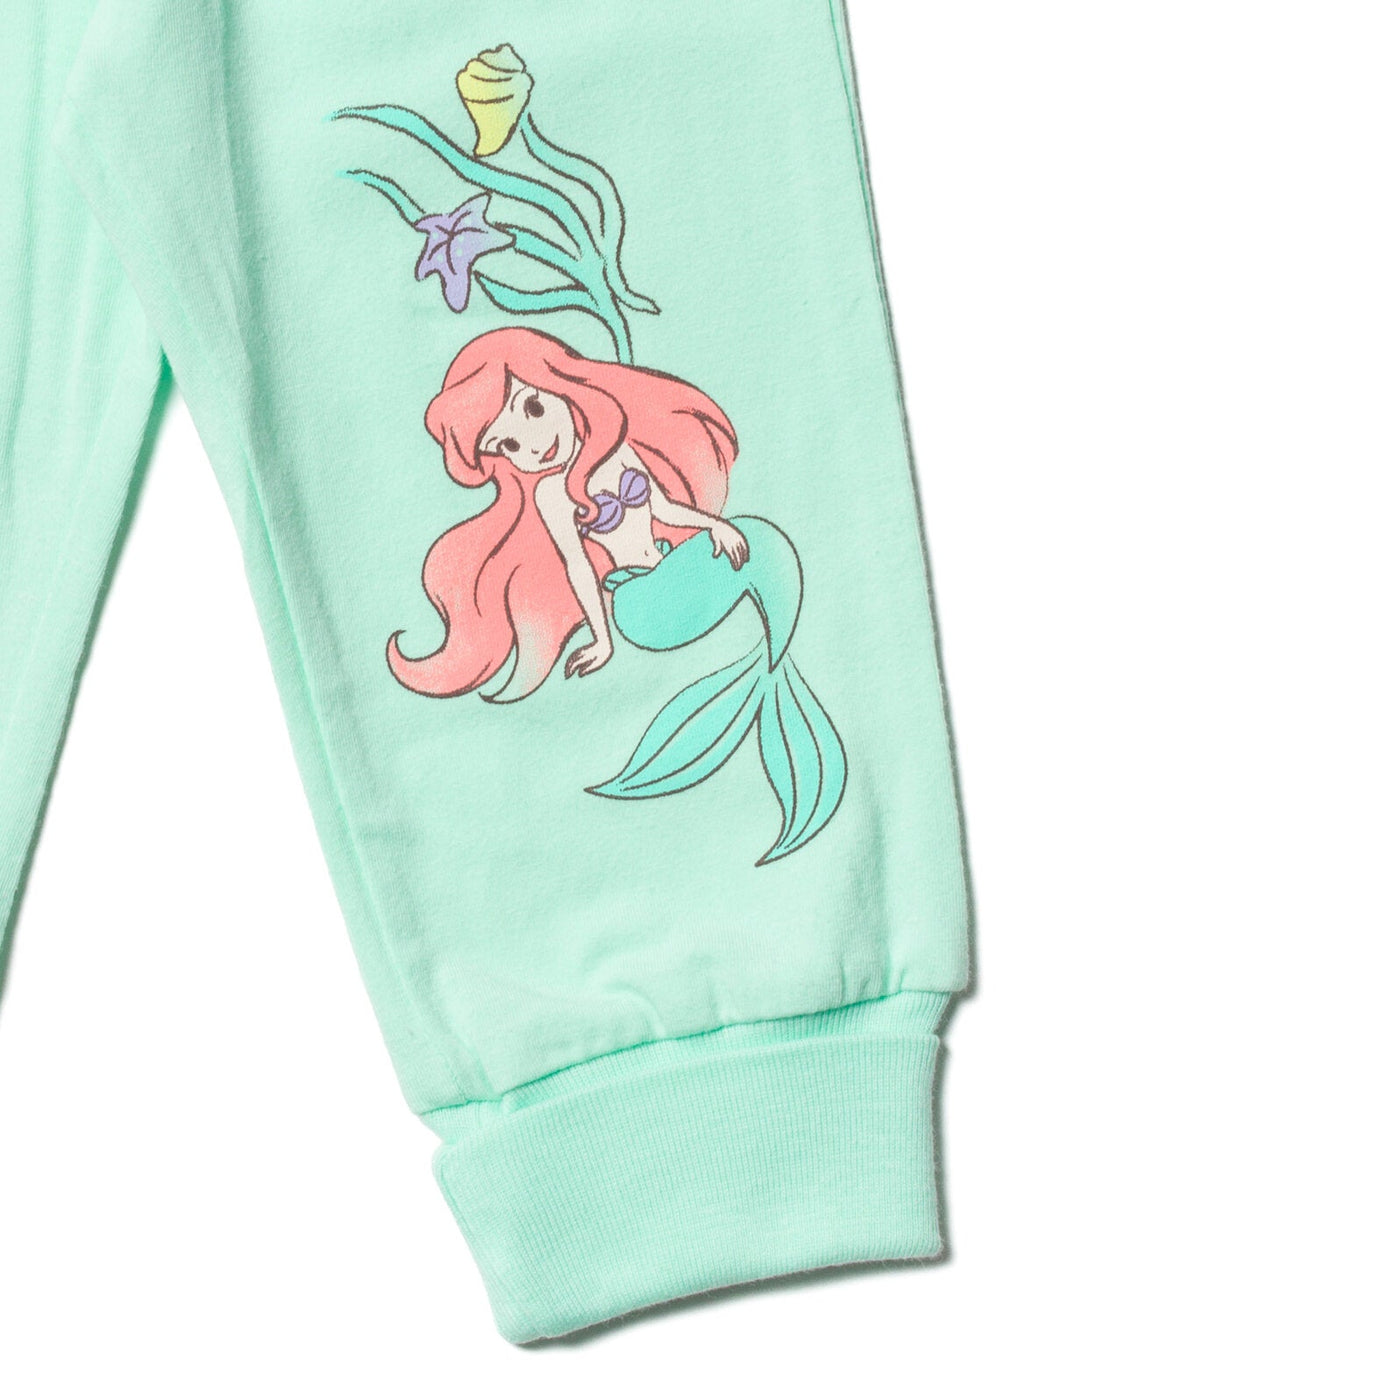 Disney Princess 2 Pack Pants made with Organic Cotton - imagikids